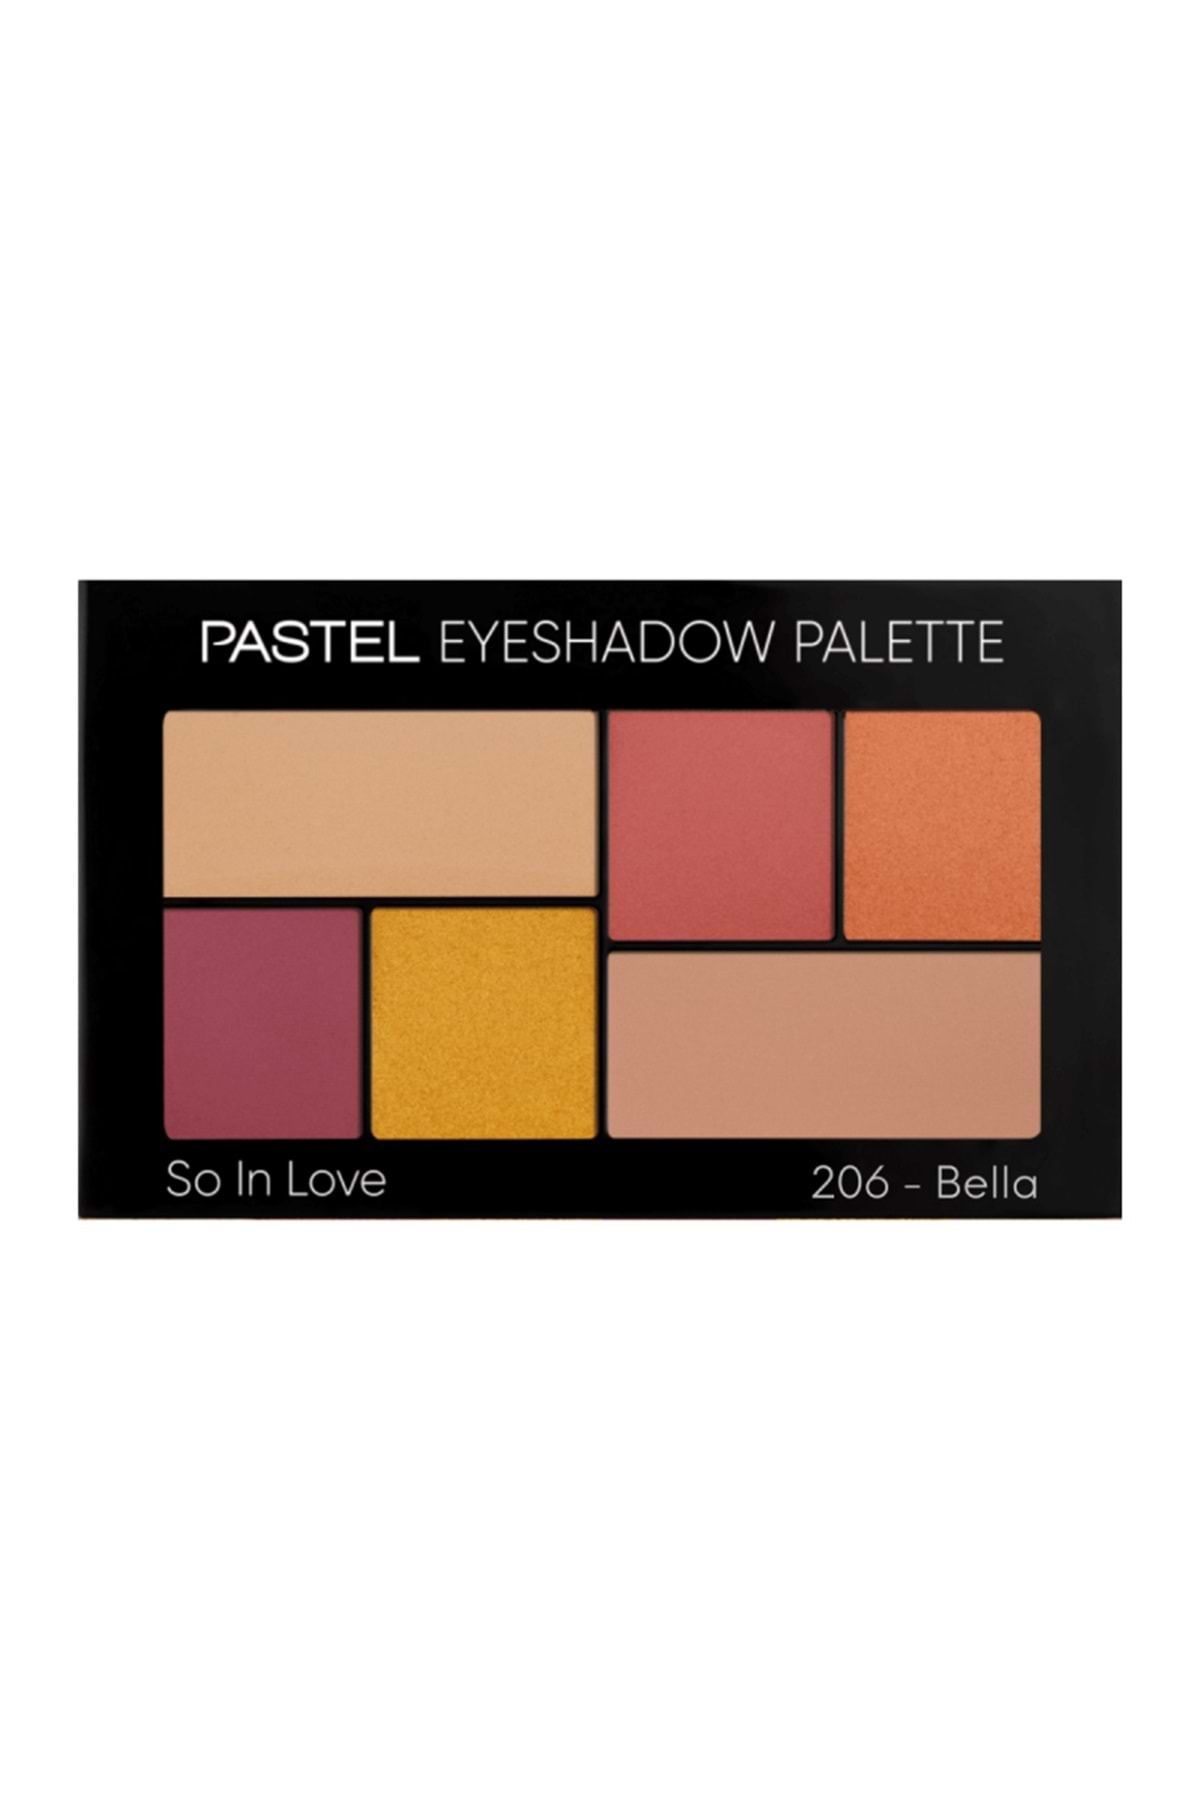 Pastel Eyeshadow Palette So In Love - Far Paleti 206 Bella